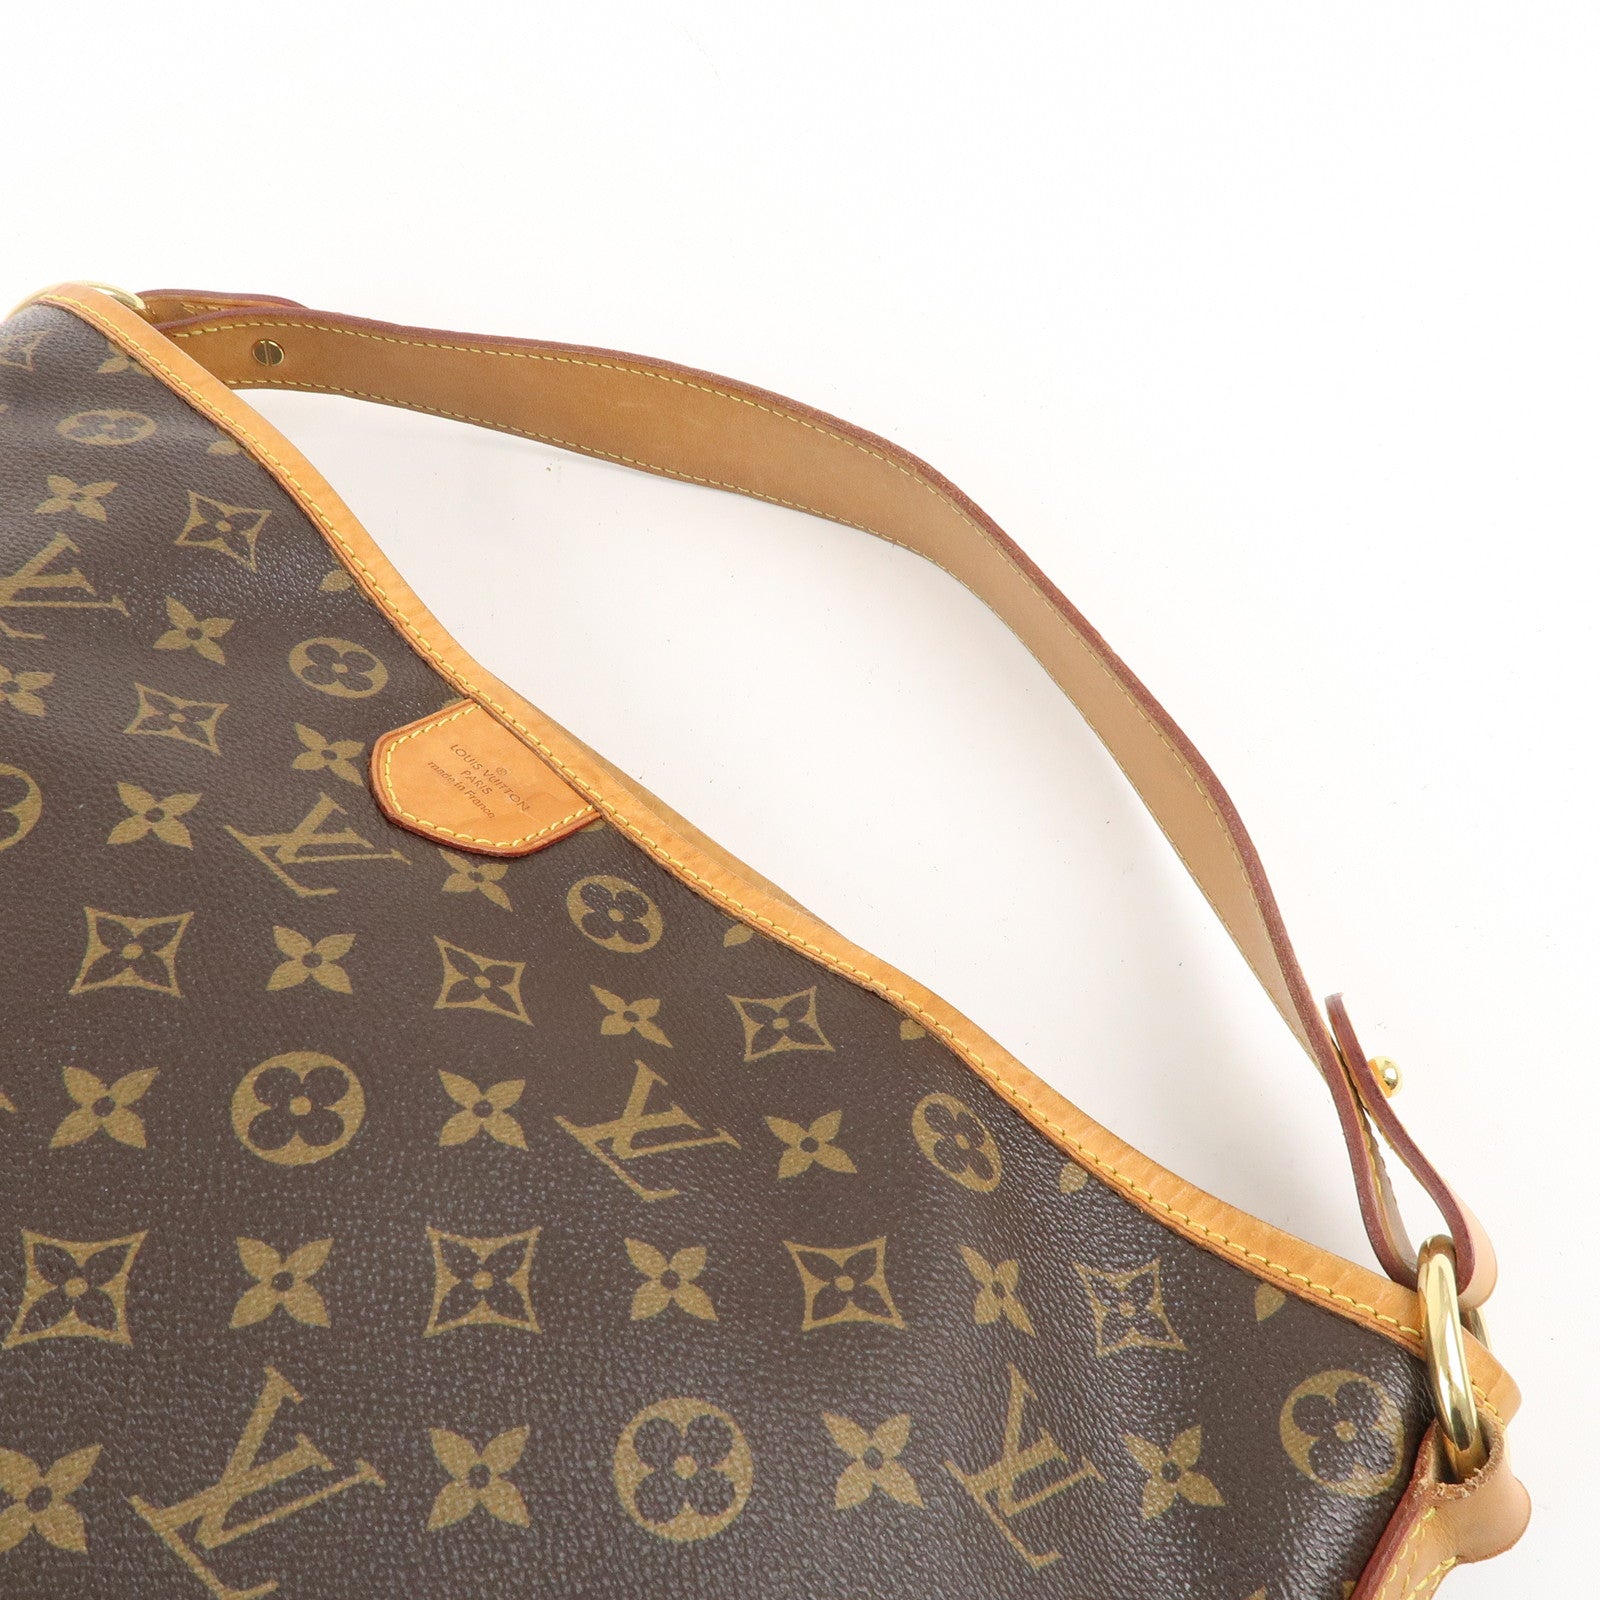 Louis Vuitton Delightful PM - Good or Bag